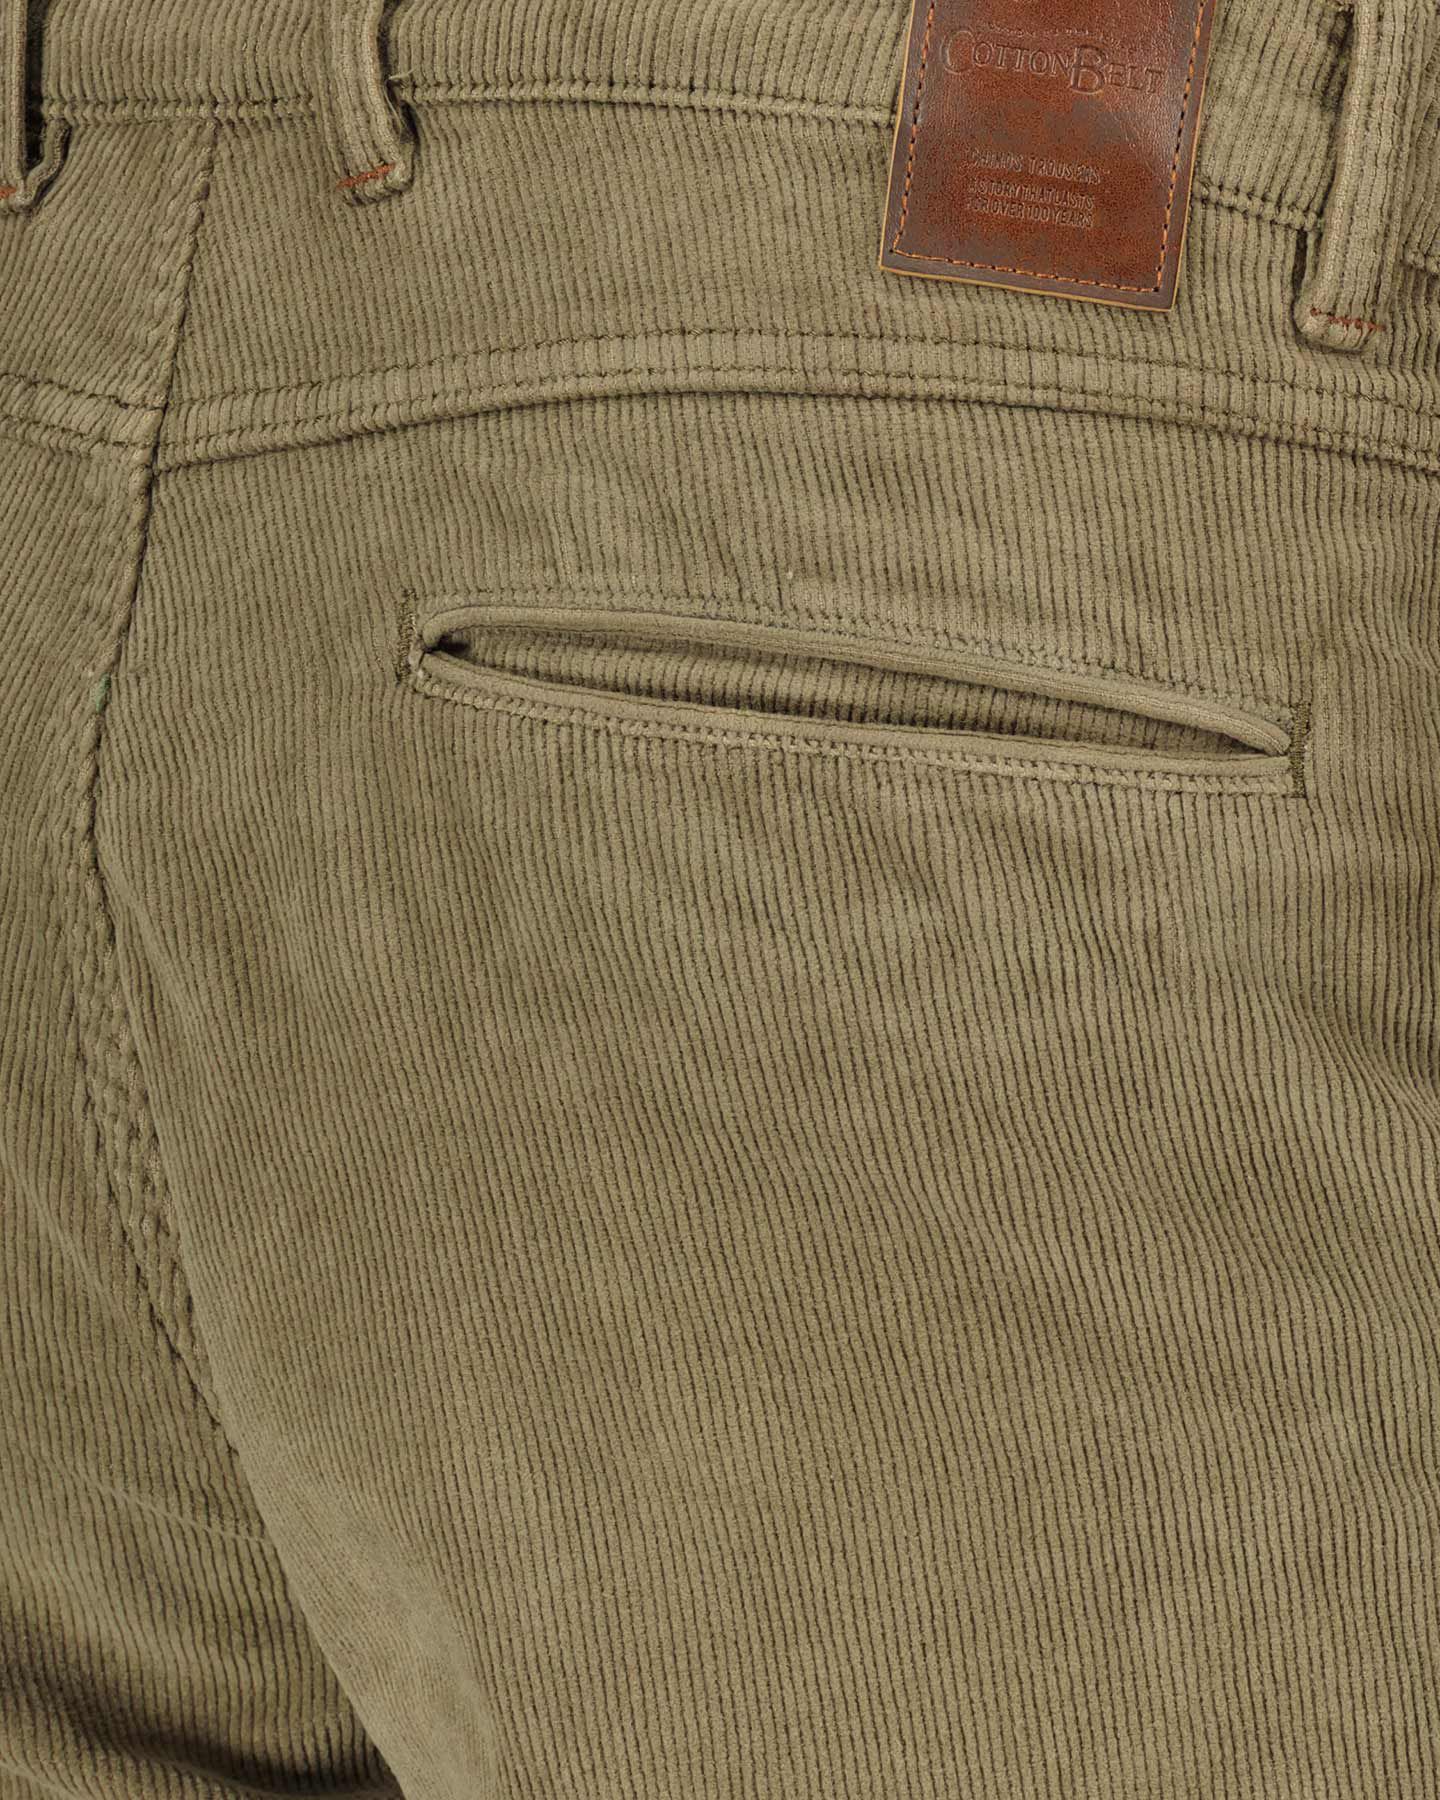  Pantalone COTTON BELT LEON J. M S4113480|165|30 scatto 4